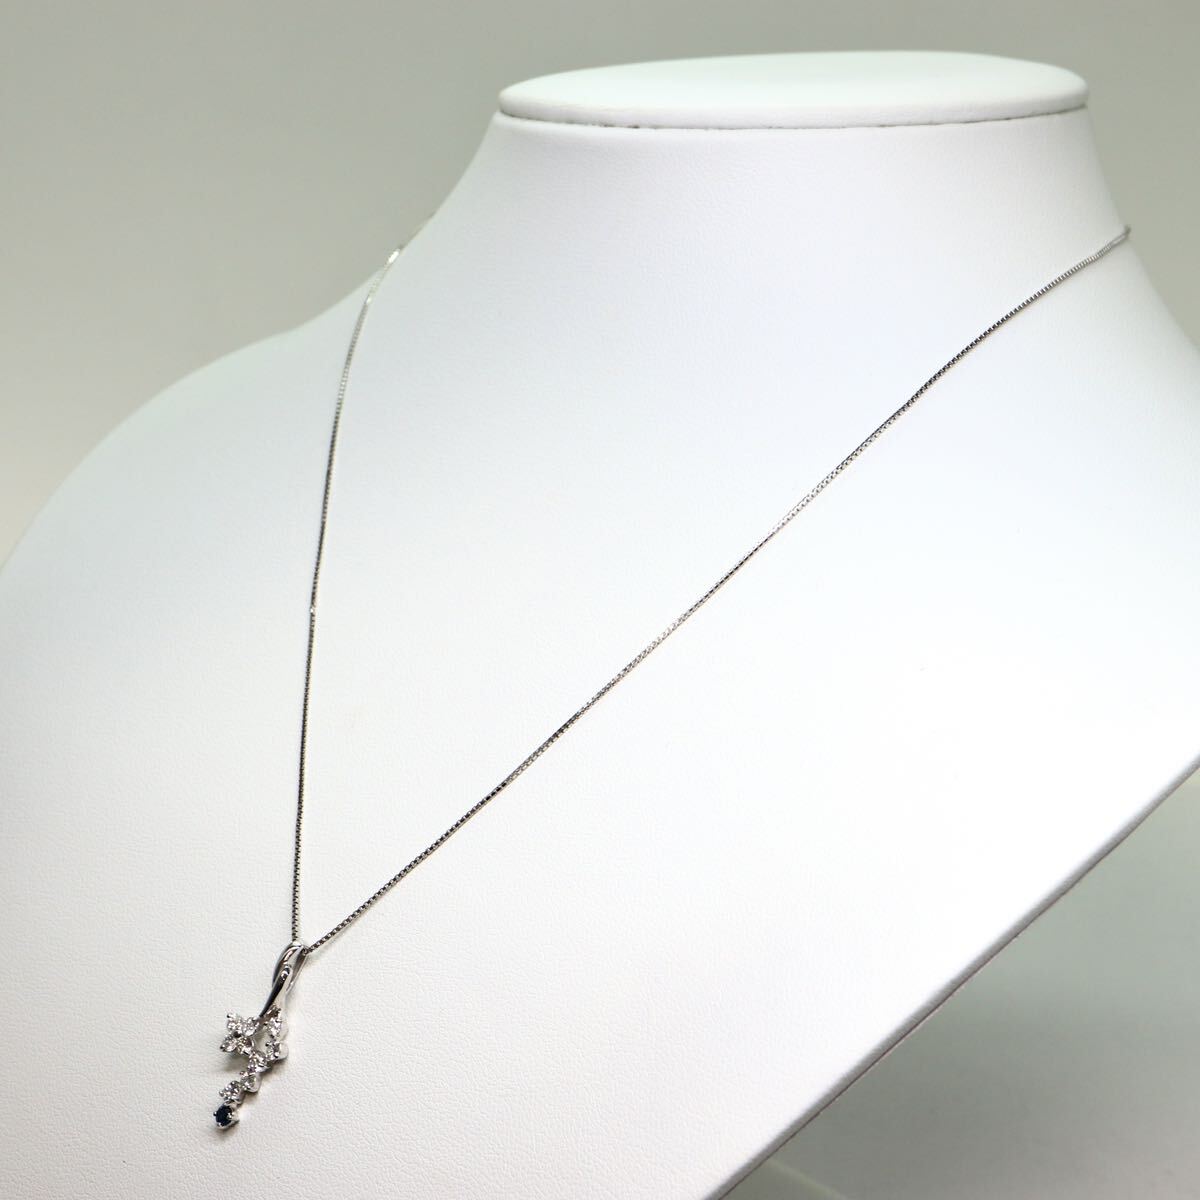 《K18WG天然ダイヤモンド/天然サファイアネックレス》A 約3.3g 約44.5cm 0.05ct 0.45ct diamond sapphire jewelry necklace EC0の画像6